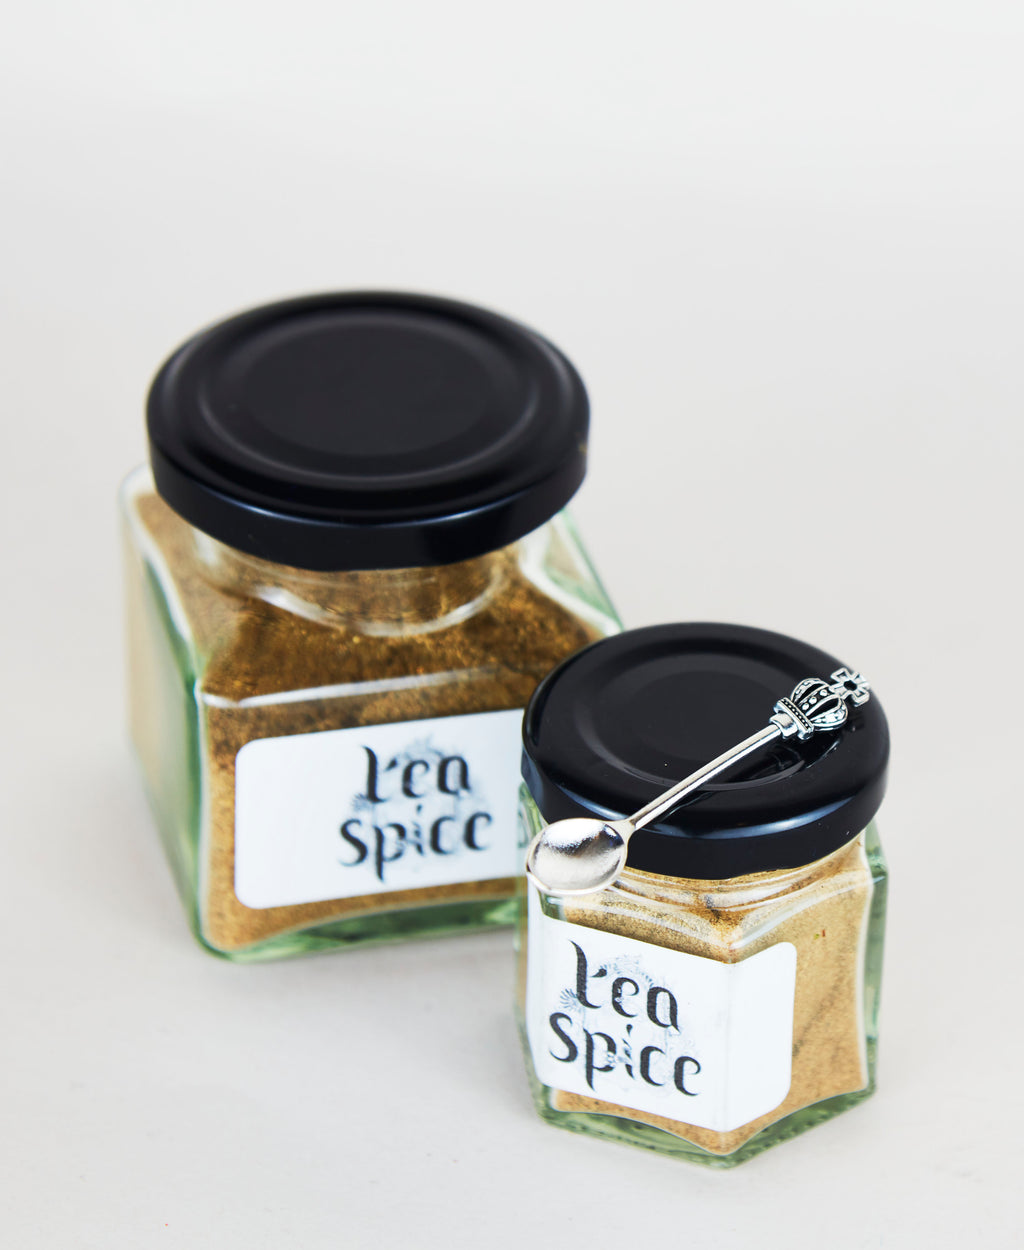 Tea Spice 'Original Blend' (50g) & Mini Spoon.